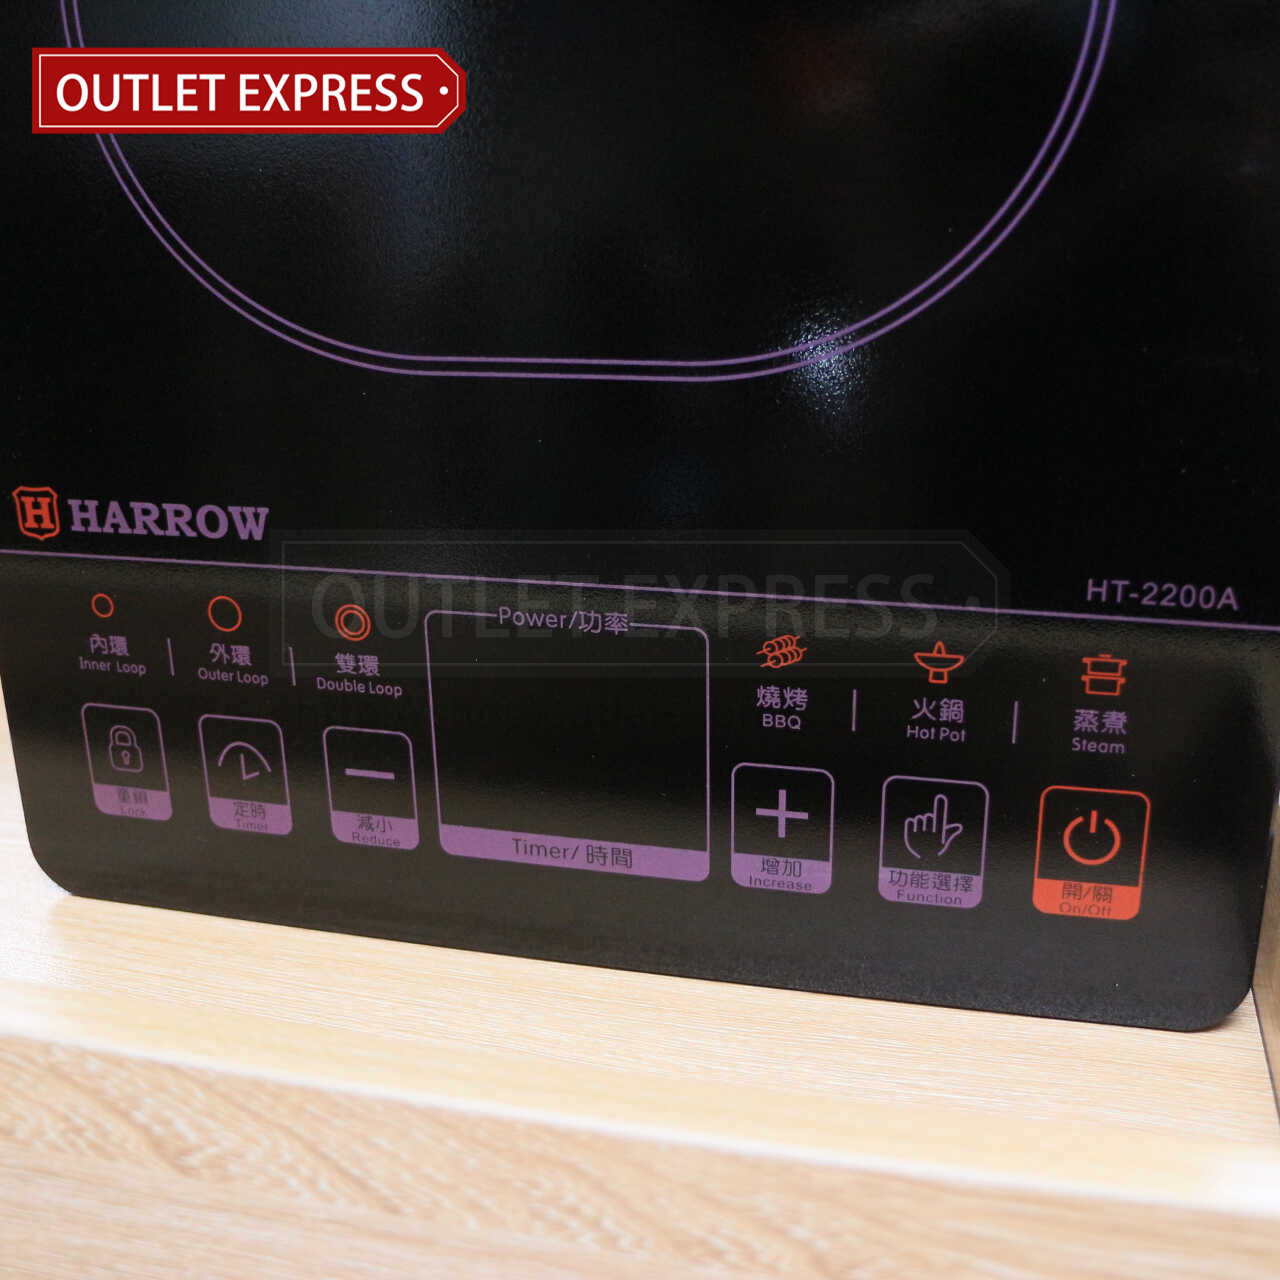 Harrow HT-2200A 三環火不鏽鋼電陶爐 | 韓式烤盤玻璃鐵板燒 功能設定- Outlet Express HK生活百貨城實拍相片